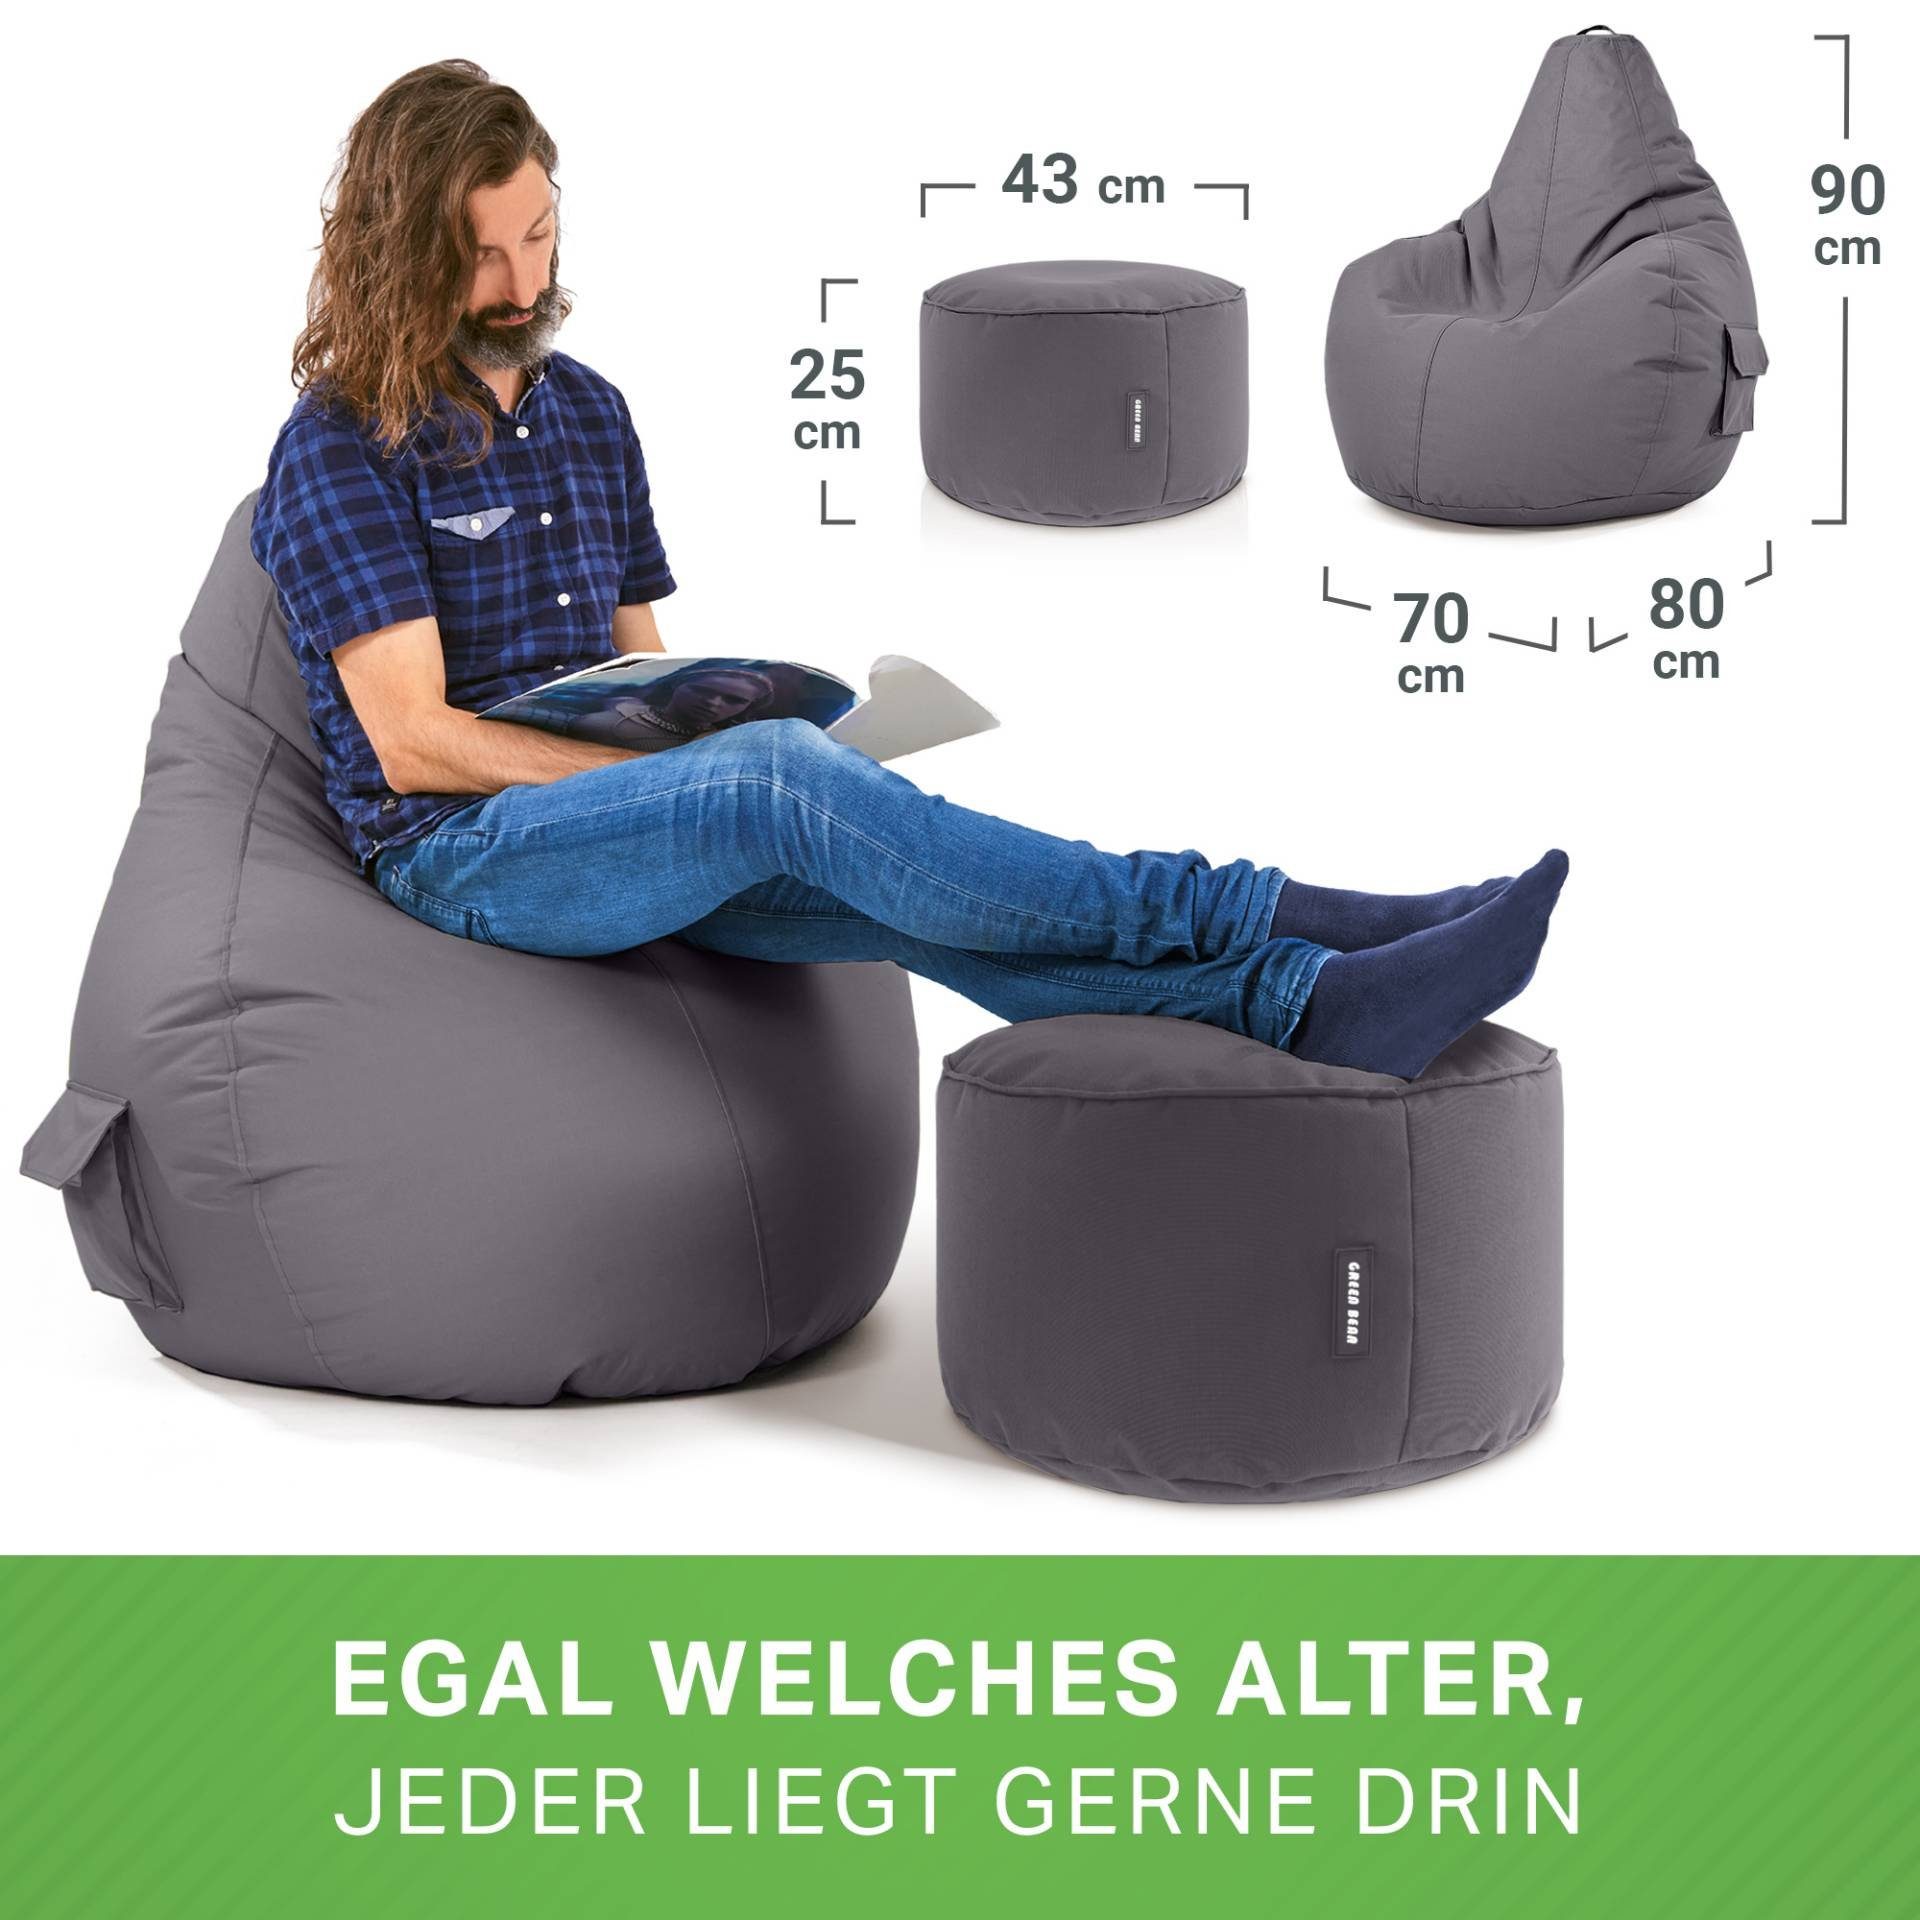 Green Bean Gaming Chair Cozy + Sitzhocker, Set Sitzkissen, Sitzsack Stay, mit Relax-Sessel Anthrazit